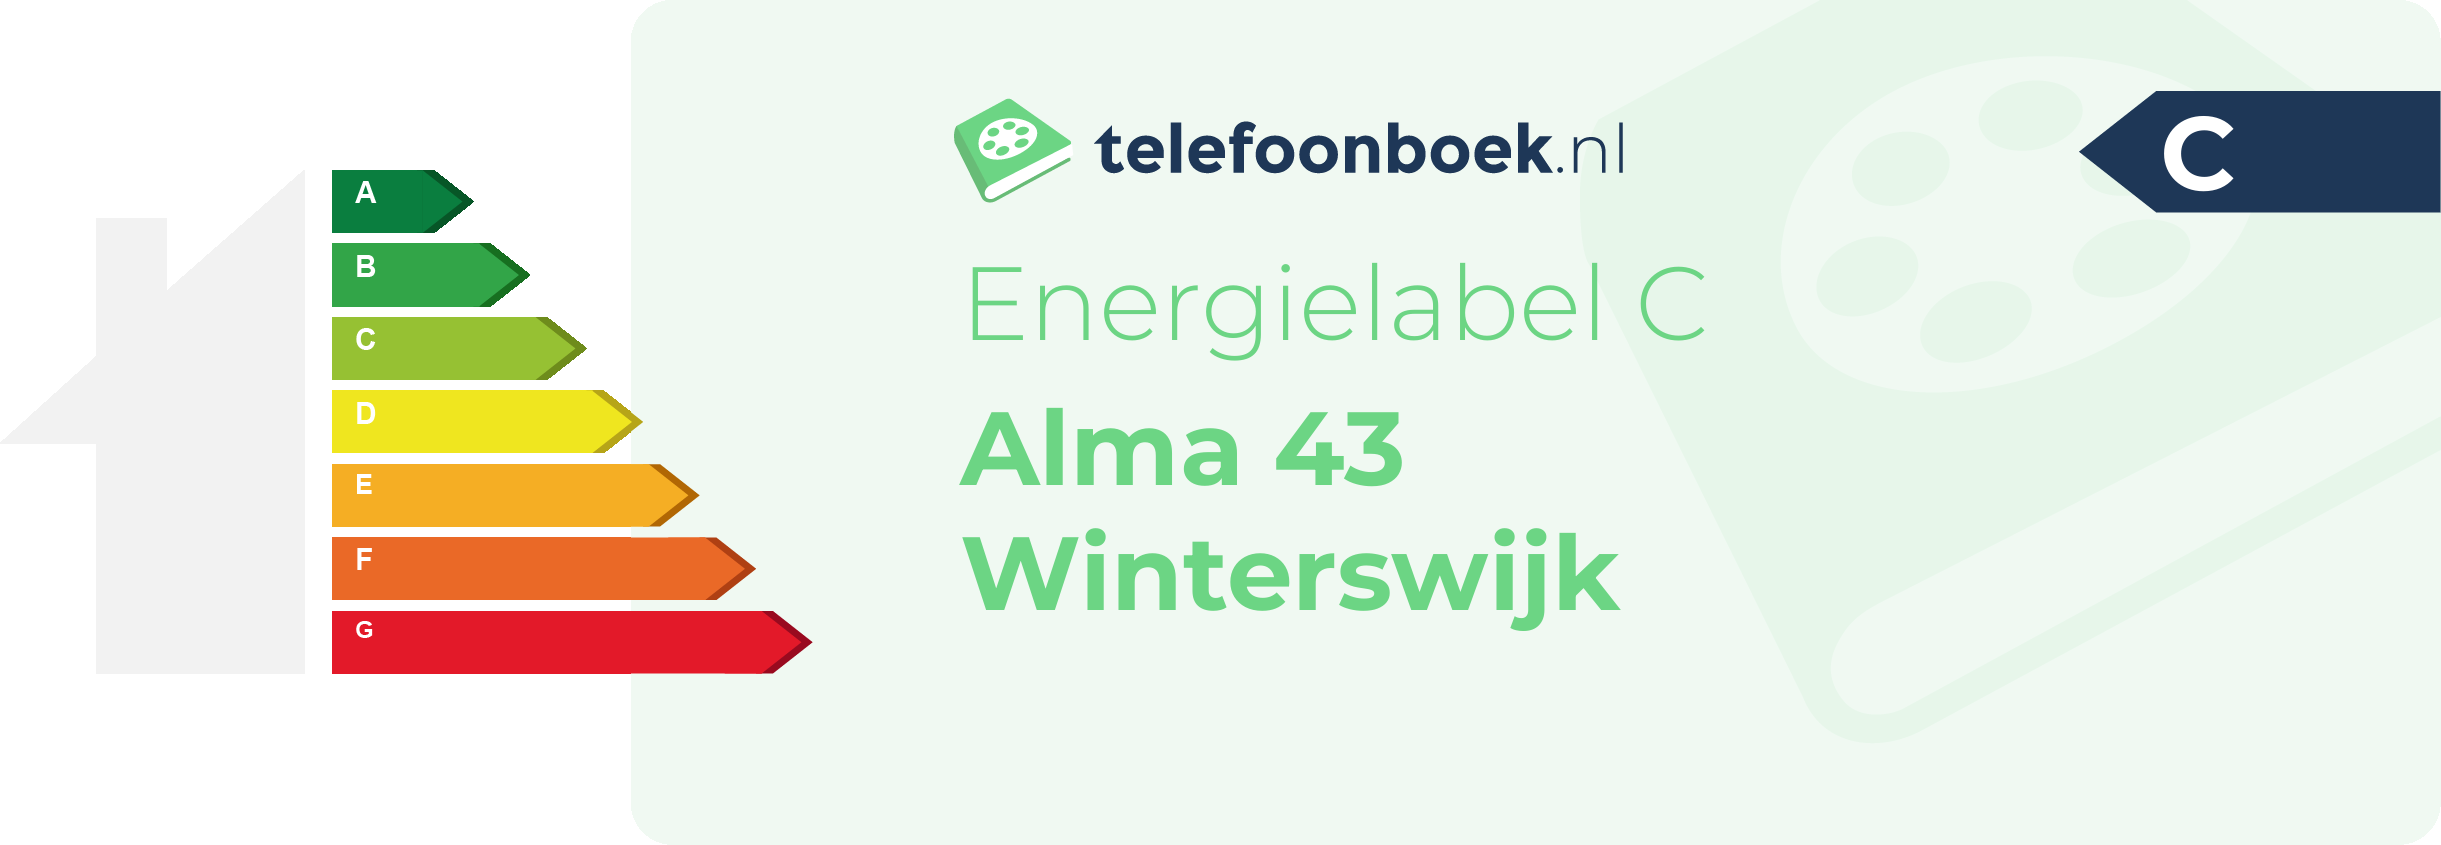 Energielabel Alma 43 Winterswijk